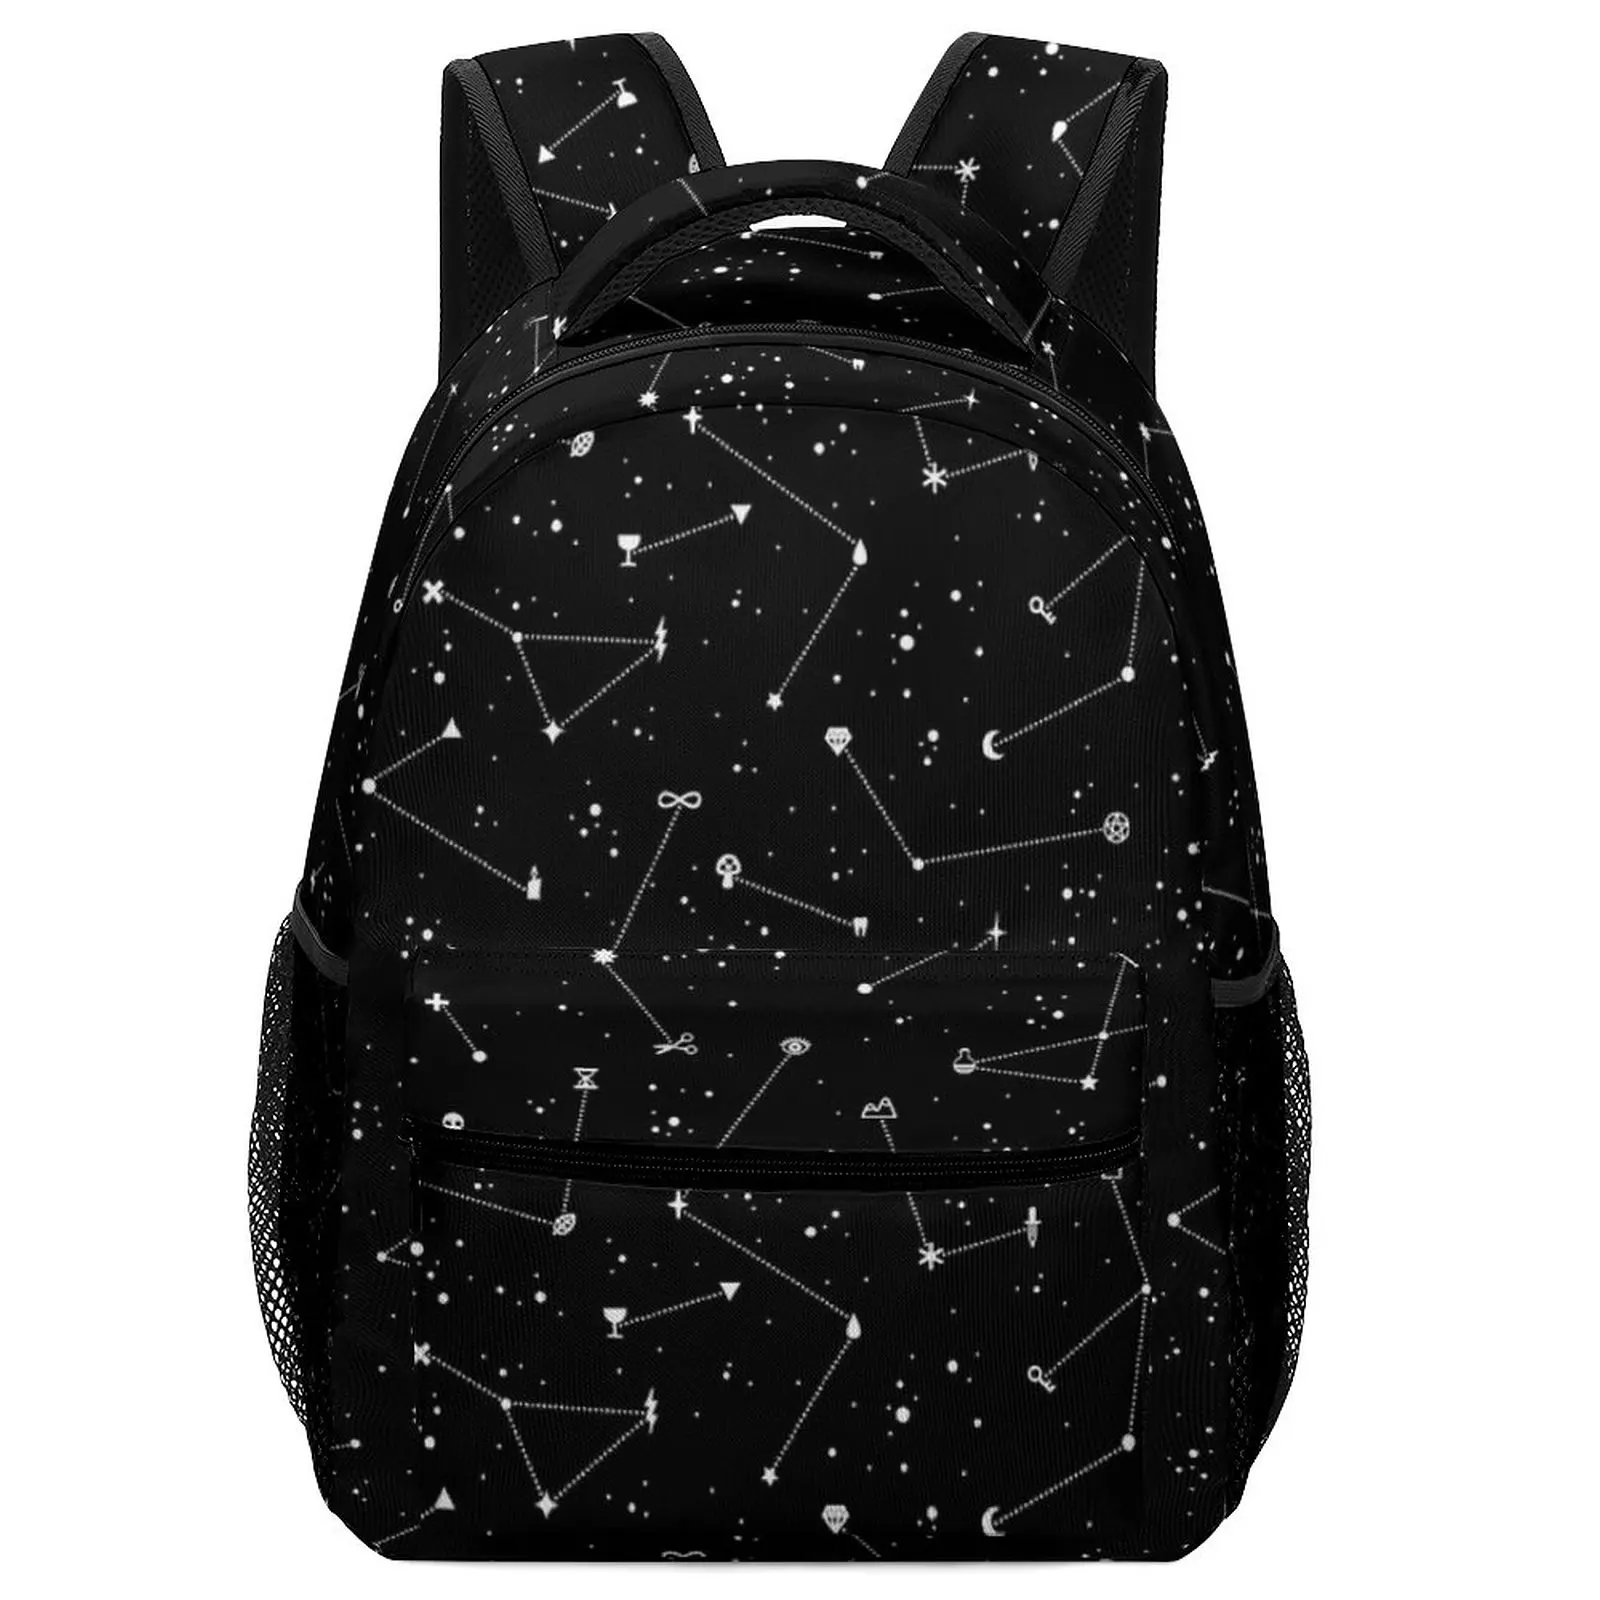 Cartoon Constellations (Black) Art Backpack Ladies for Girls Boys School Bag for Teenagers Black Backpack For Boys